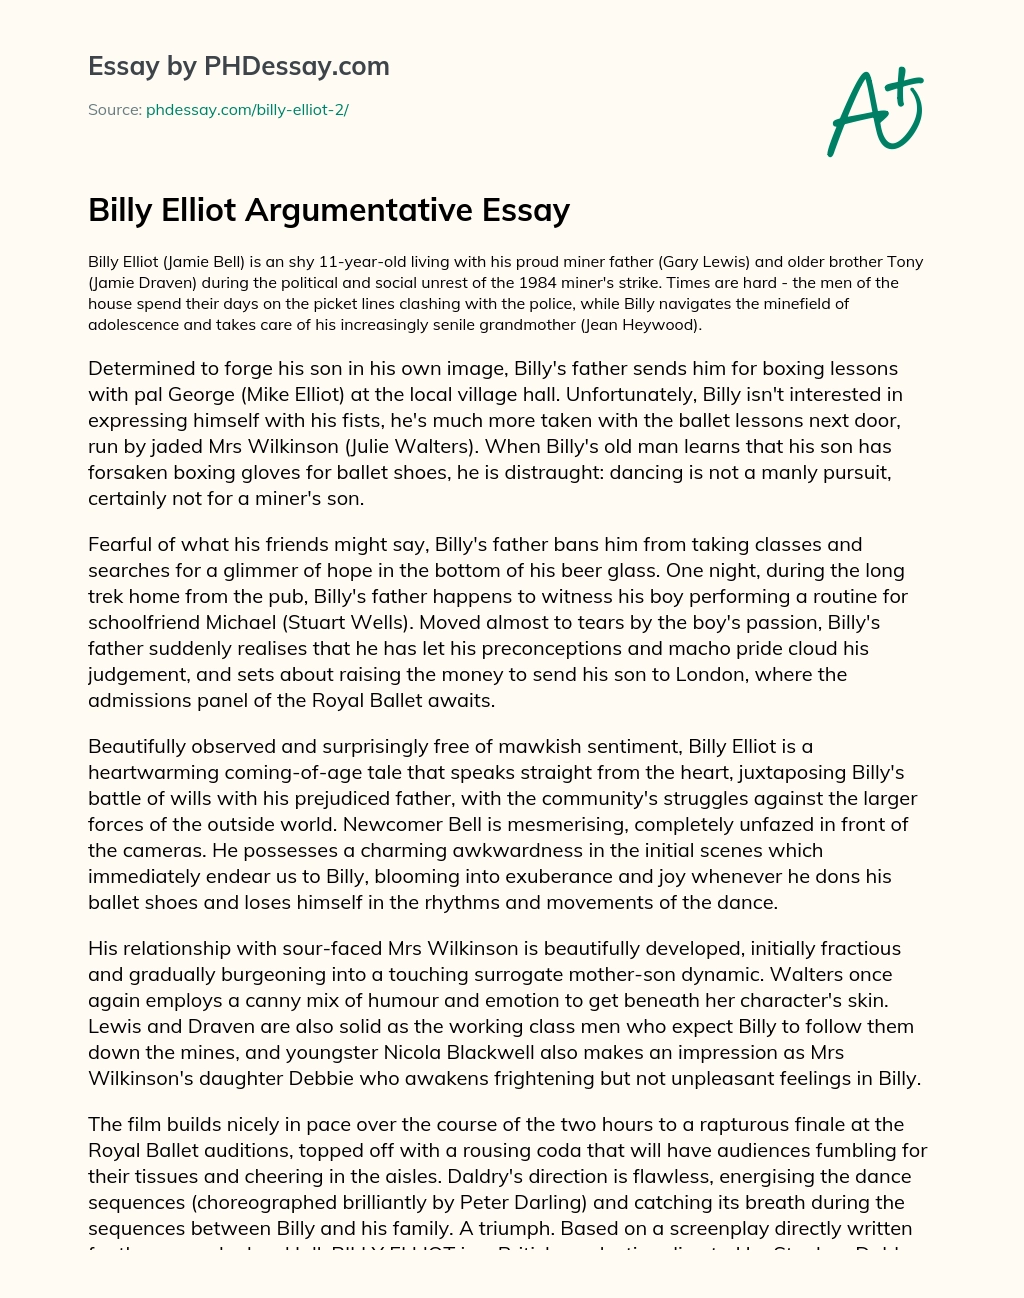 Billy Elliot Argumentative Essay essay